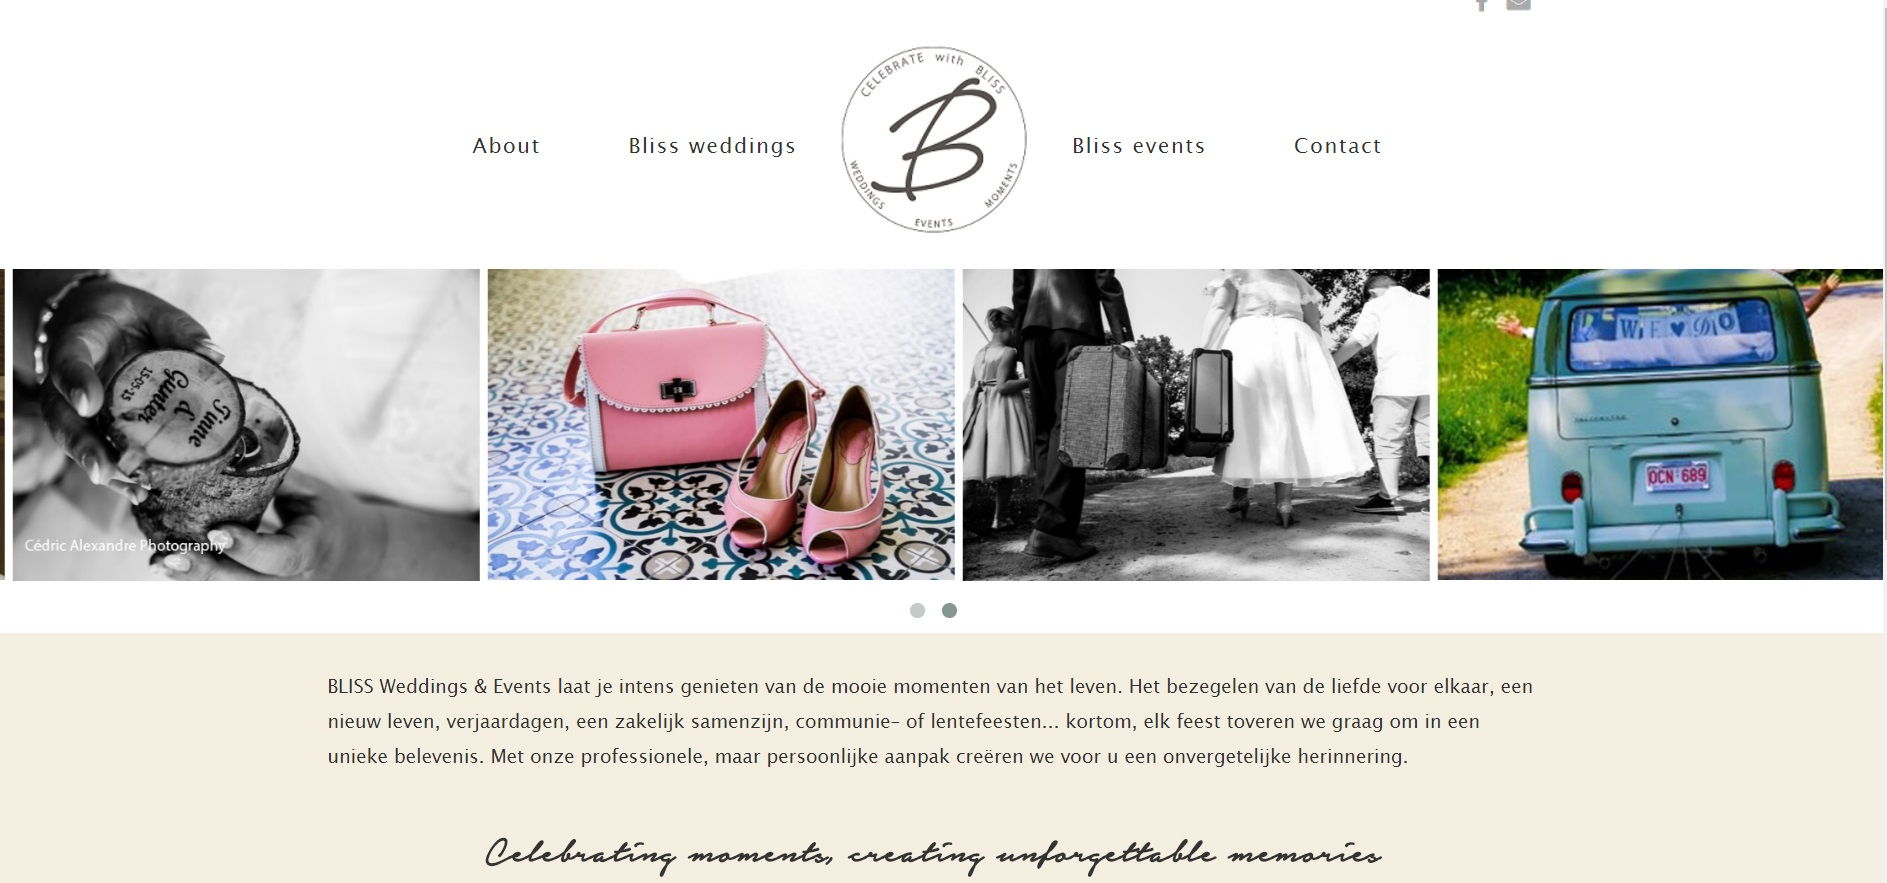 Bliss events | Webdesign weddingplanner